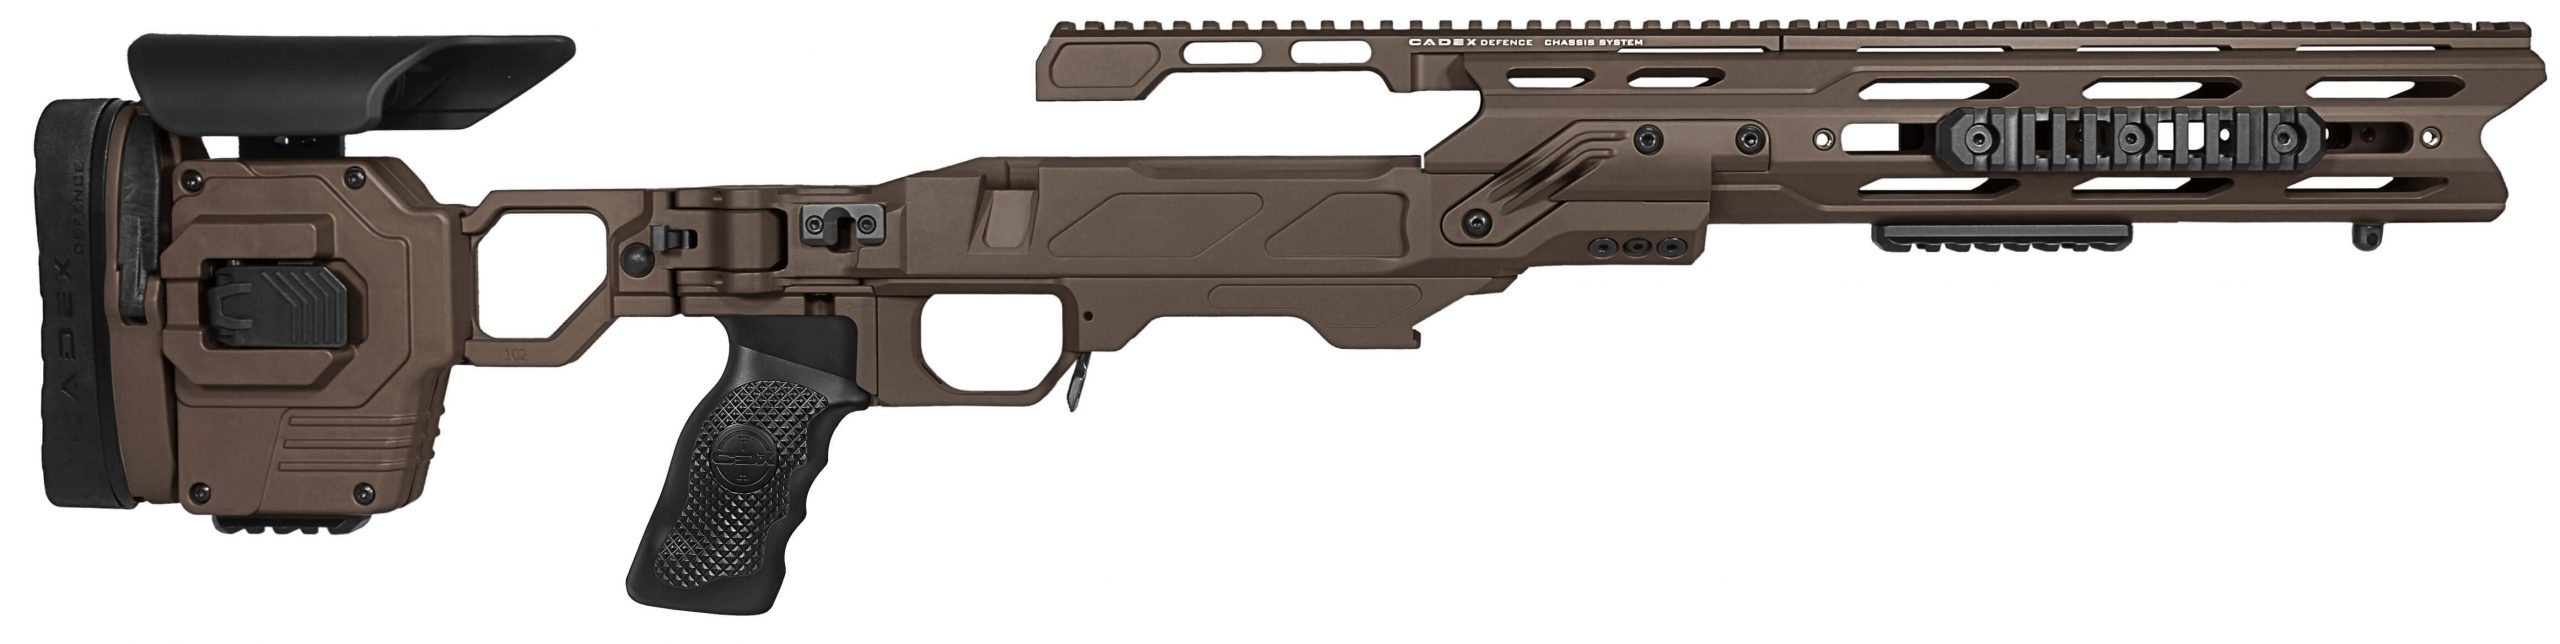 Tactical Long Range Precision Rifle Seeks Cutting Edge Chassis – Enter the Cadex  Defense Strike Dual – SHWAT™